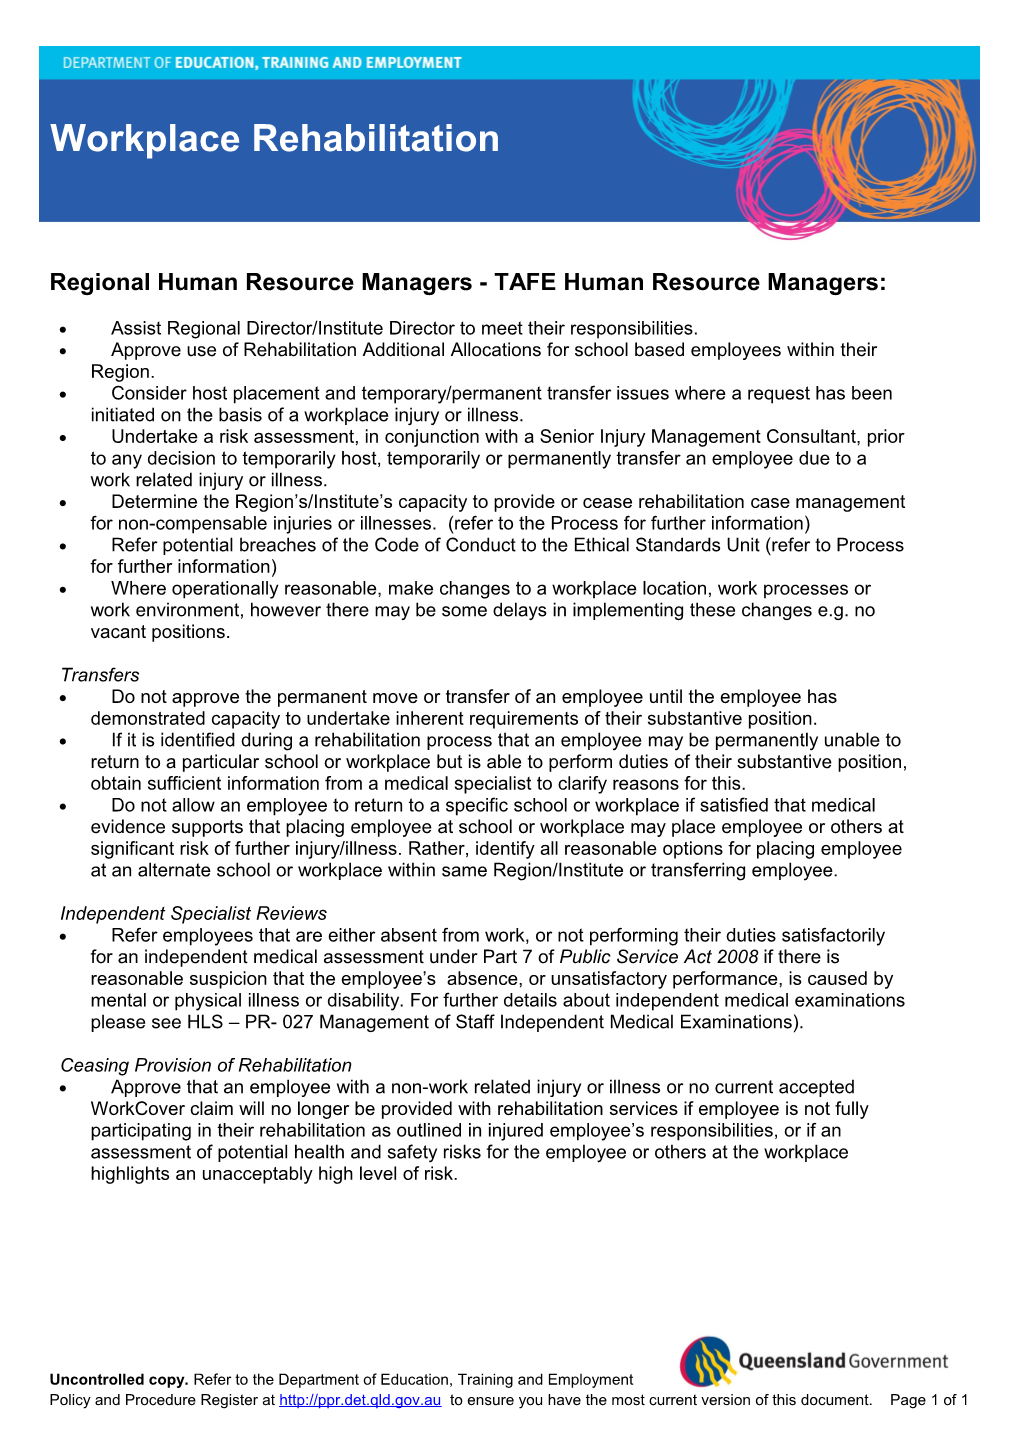 Responsibilities - Regional Human Resource Managers and TAFE Human Resource Managers